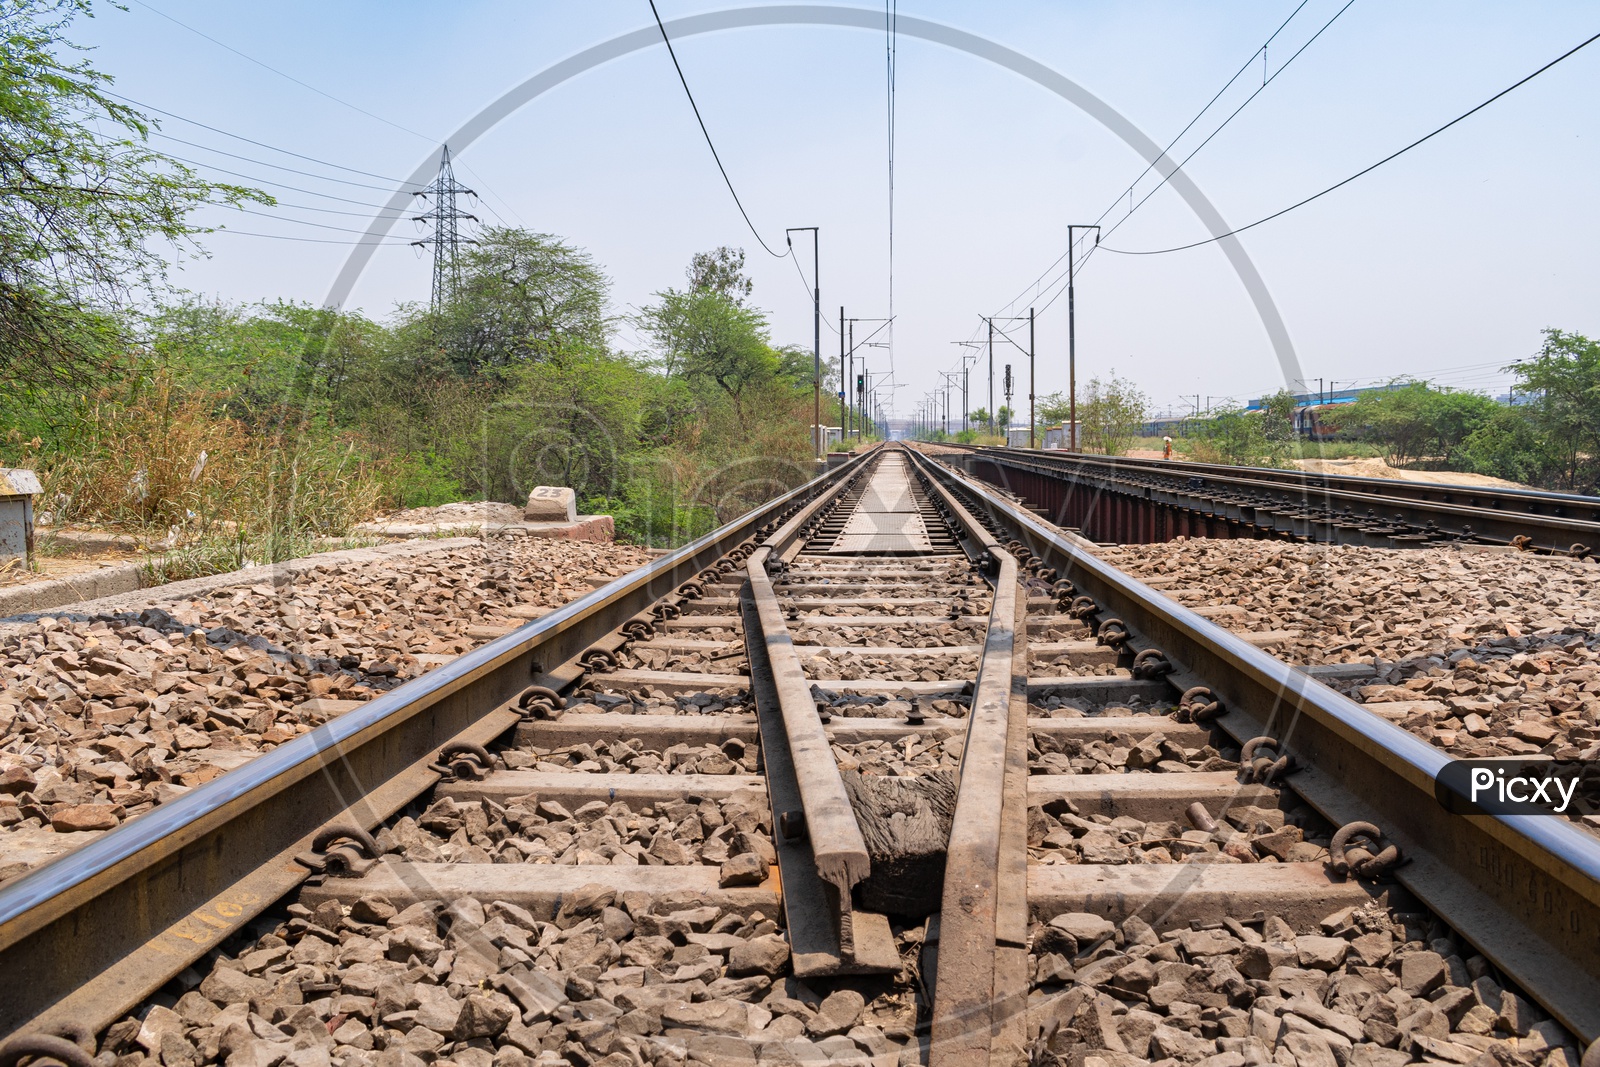 Railway track at Anand Vihar, Delhi